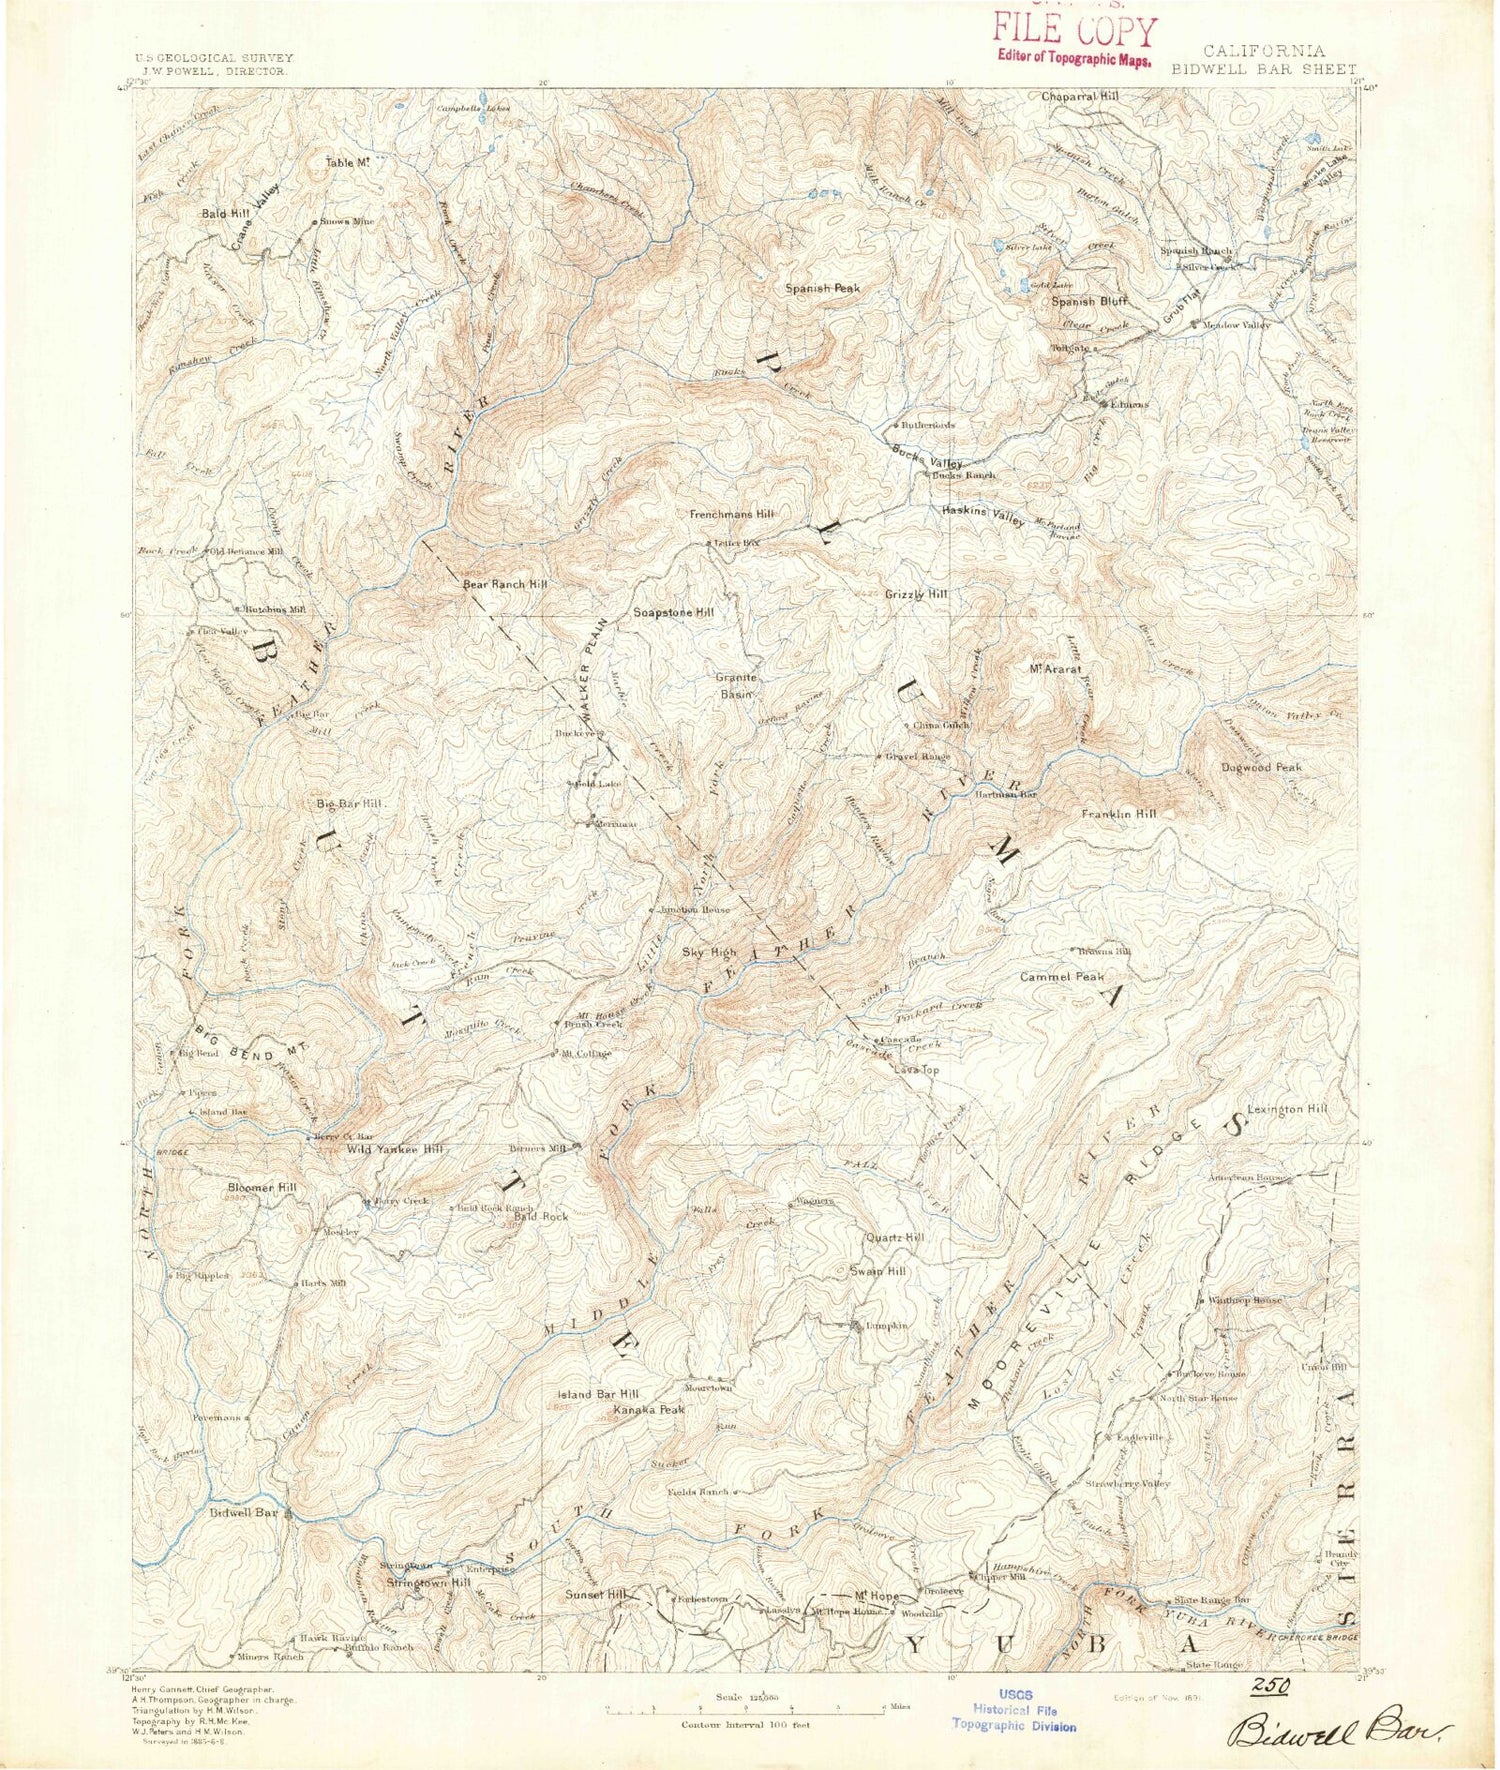 Historic 1891 Bidwell Bar California 30'x30' Topo Map Image